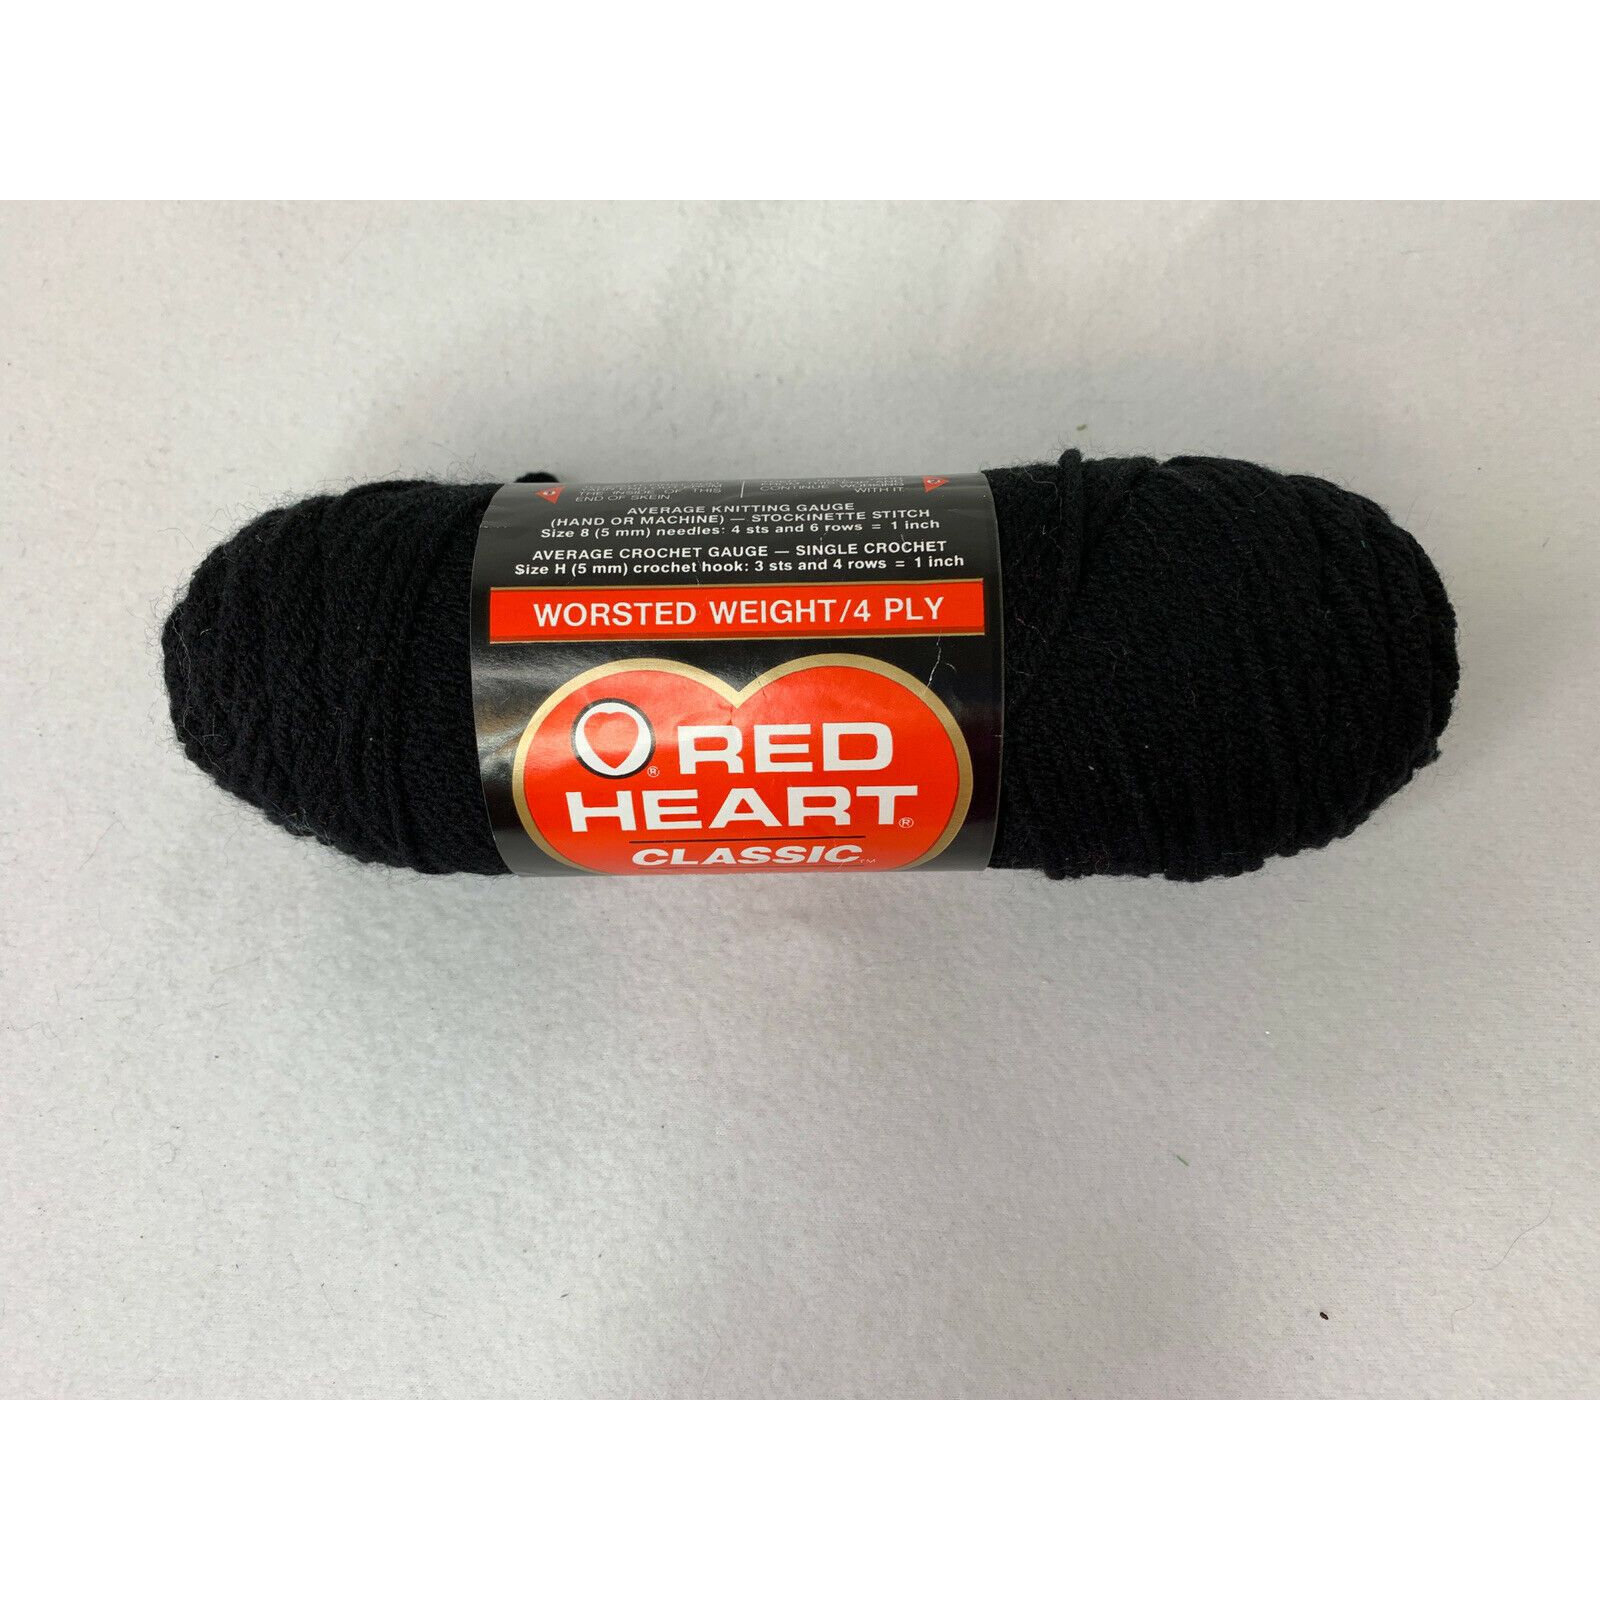 Red Heart Classic Yarn Black 100% Acrylic 3.5 Oz USA AT147 